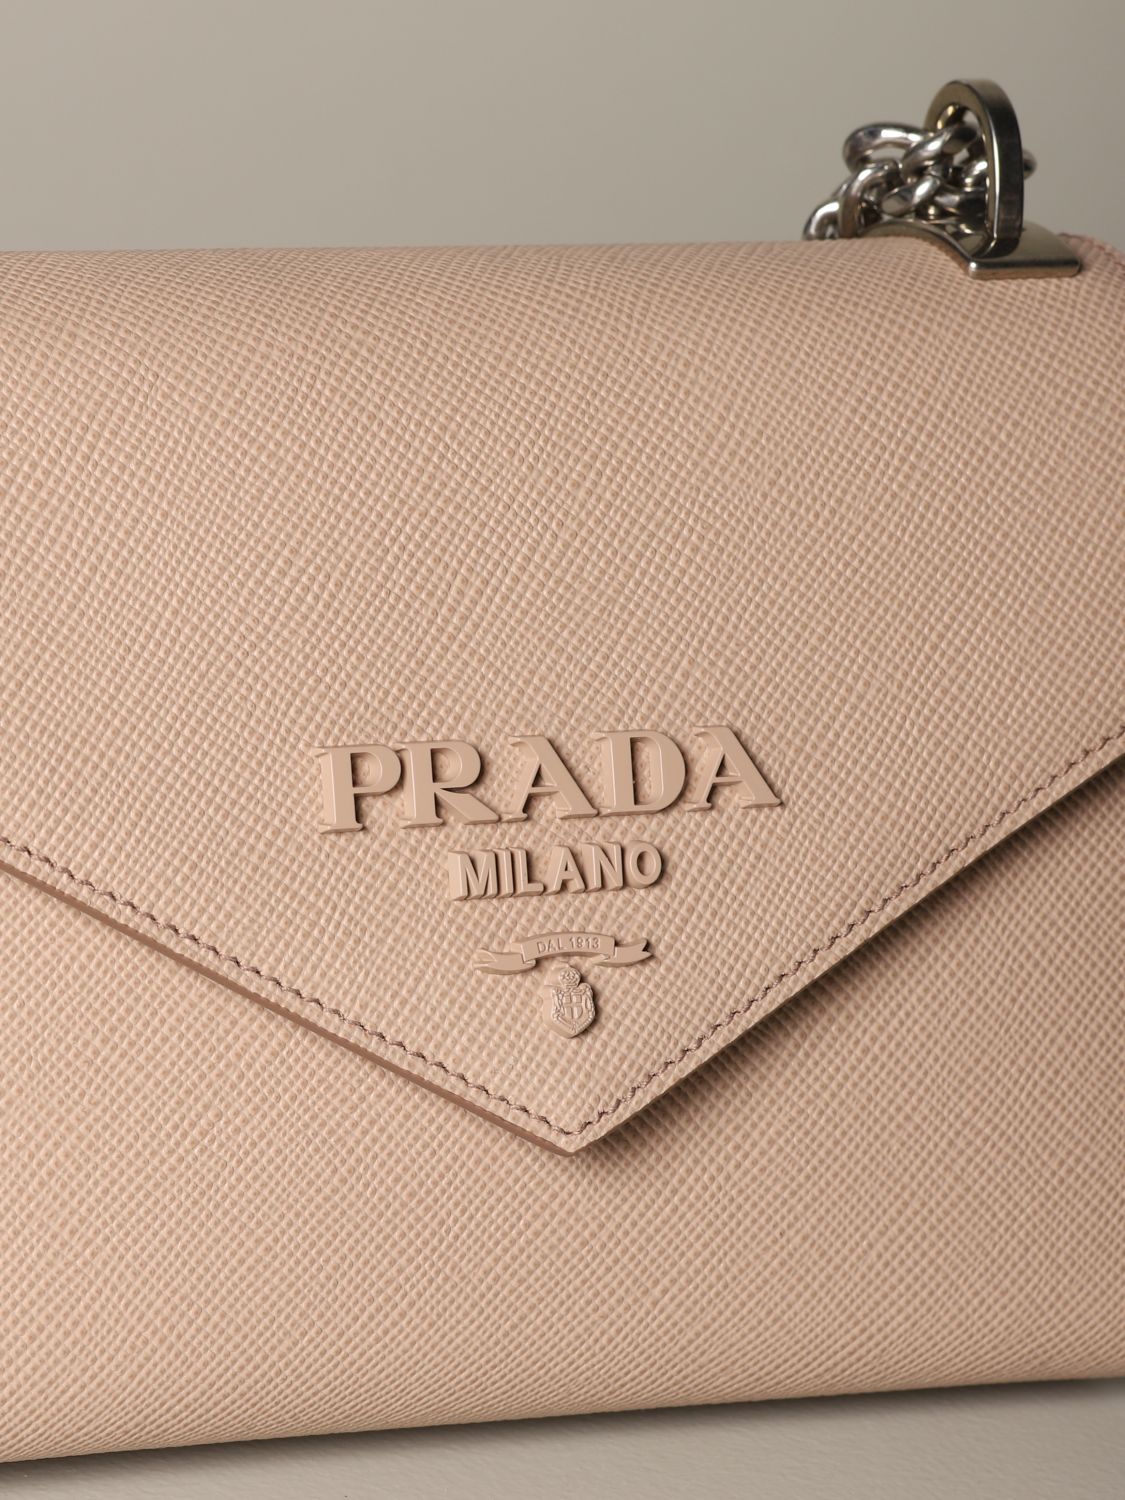 PRADA 1BD127 Logo/Crossbody monochrome Bag Chain Shoulder Bag leather pink  